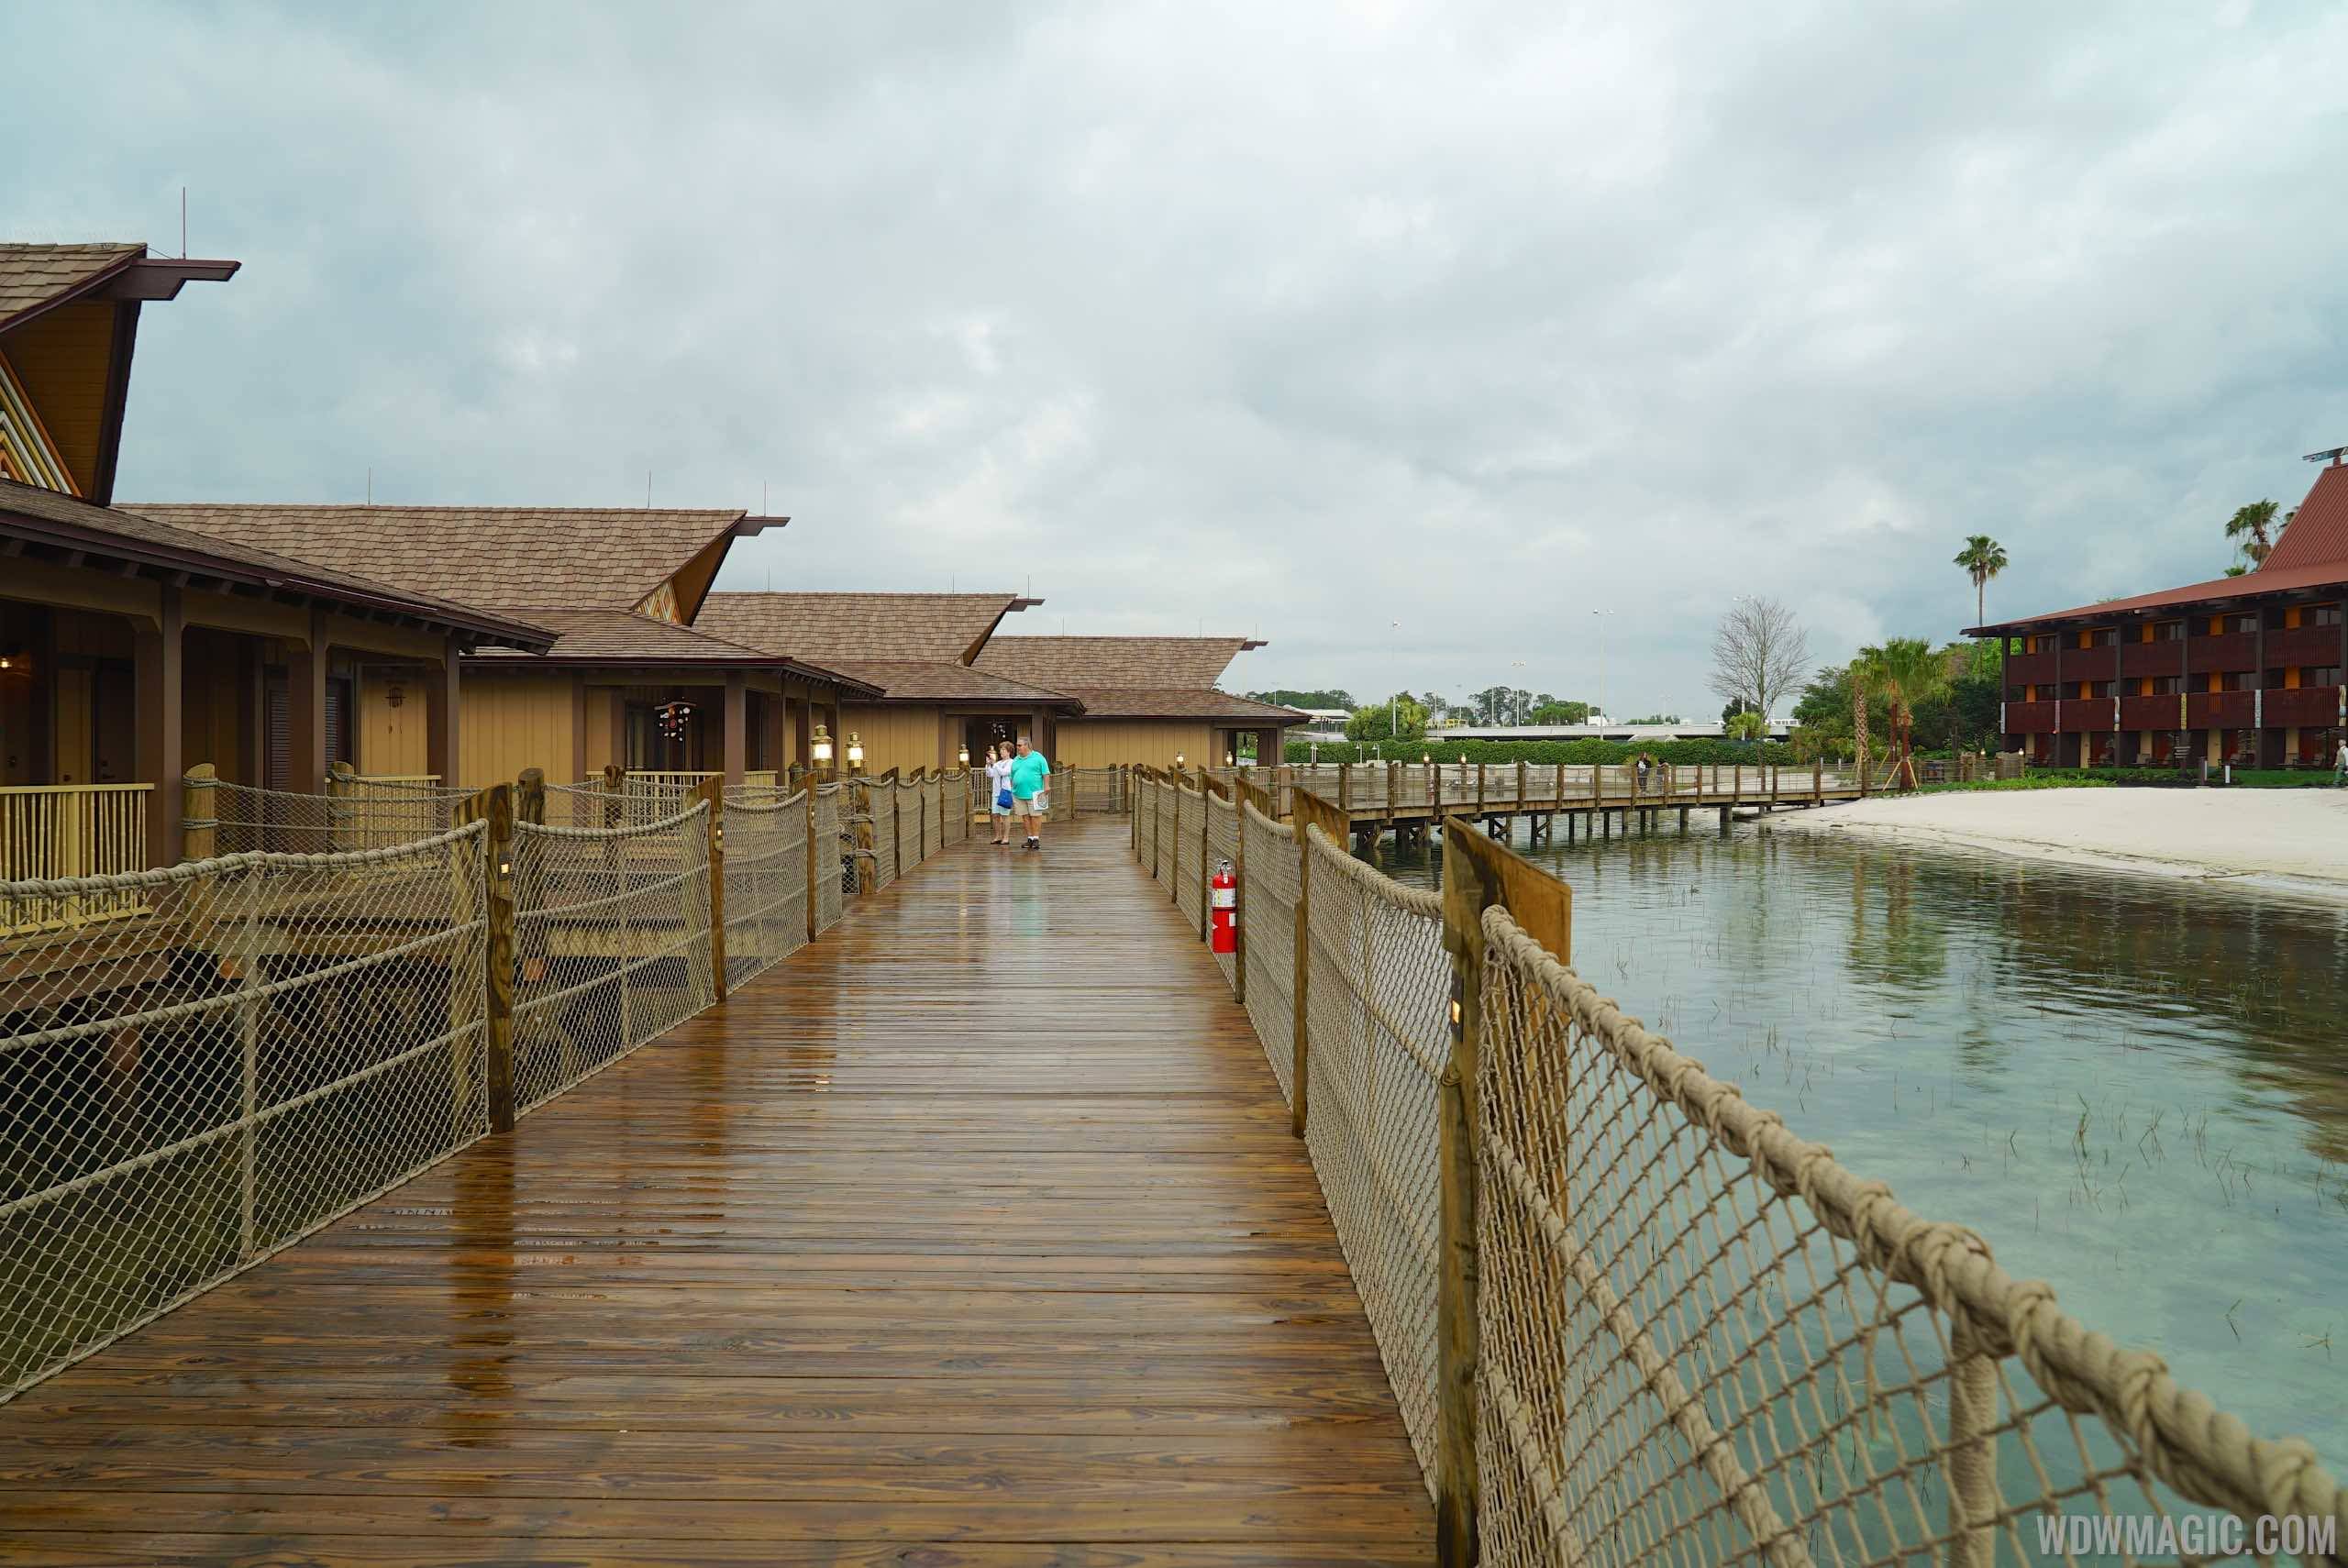 PHOTOS - Take a complete tour through a completed Bora Bora Bungalow at Disney's Polynesian Village Resort